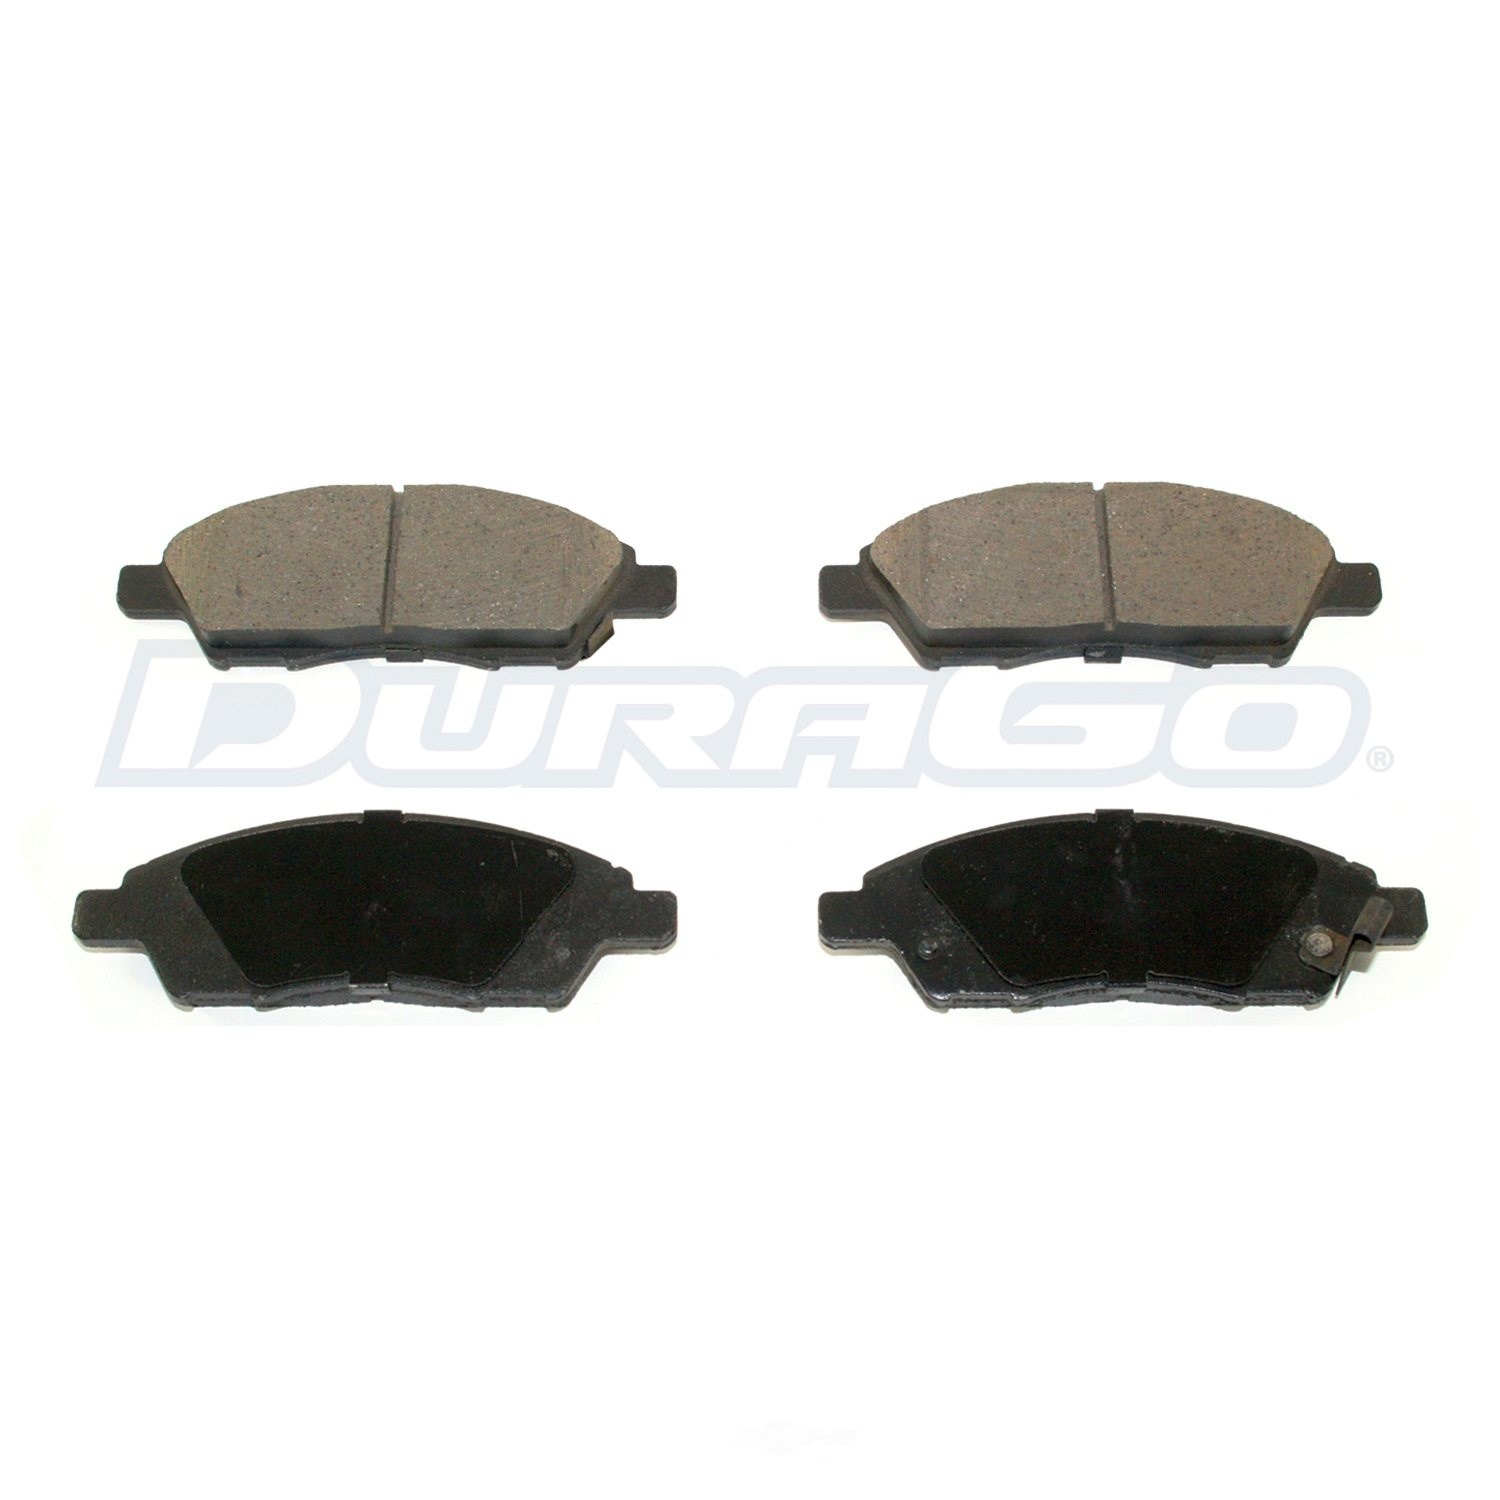 DURAGO - Disc Brake Pad (Front) - D48 BP1592C